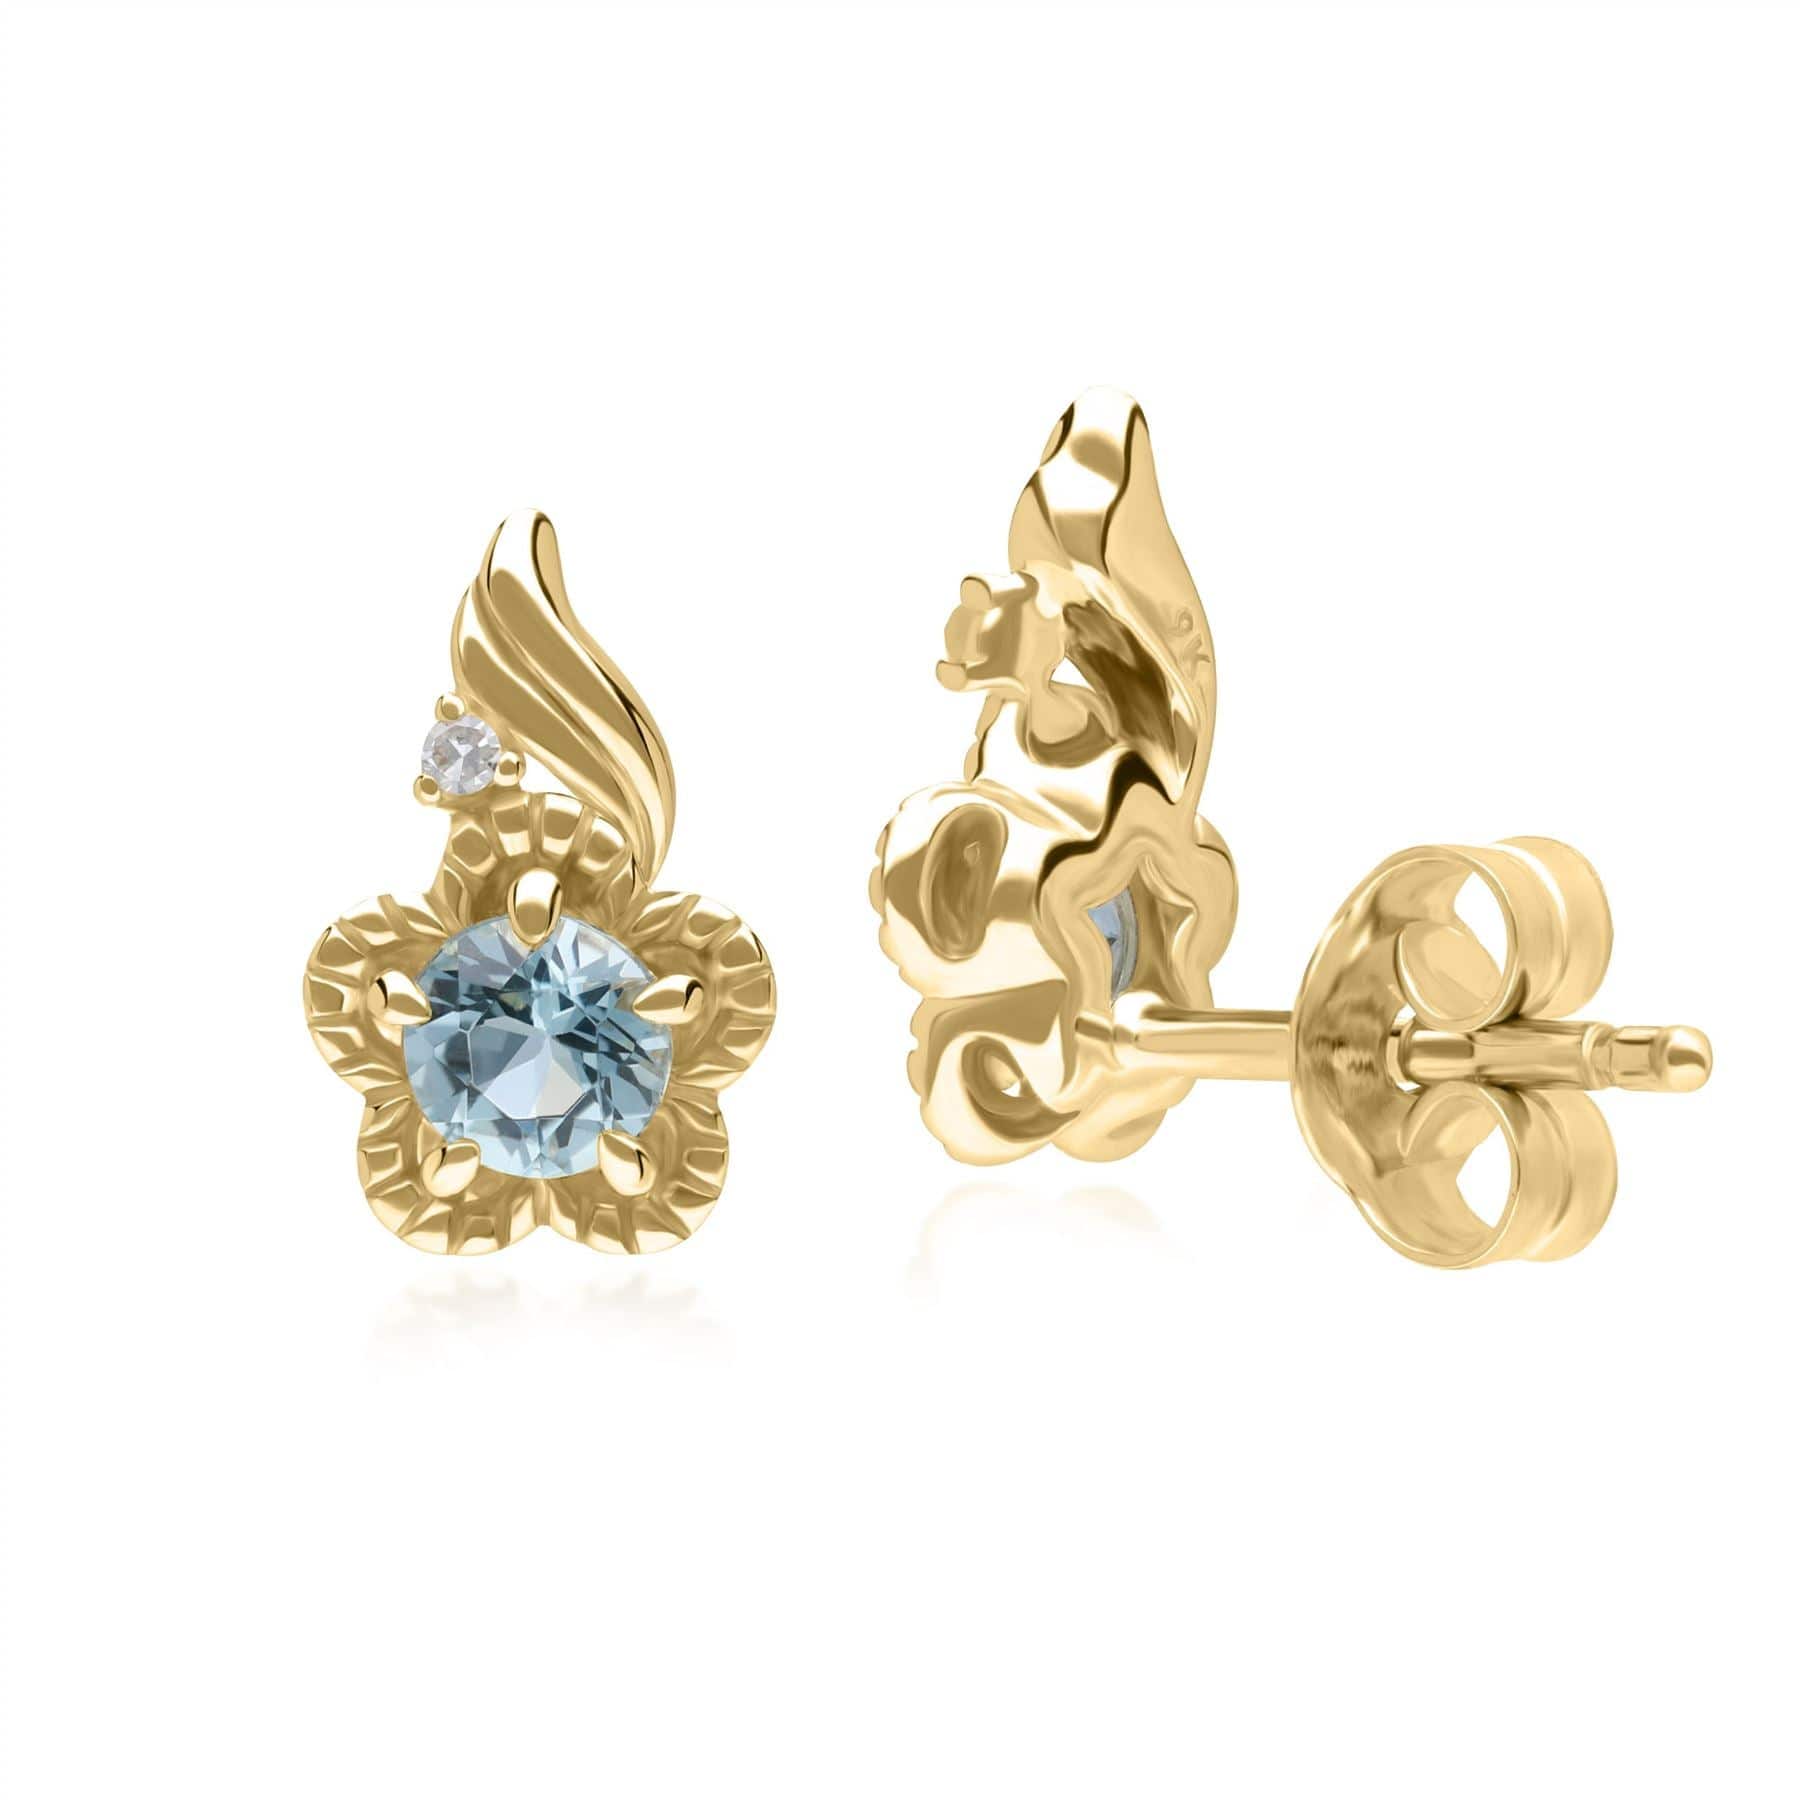 Floral Round Blue Topaz & Diamond Stud Earrings in 9ct Yellow Gold - Gemondo